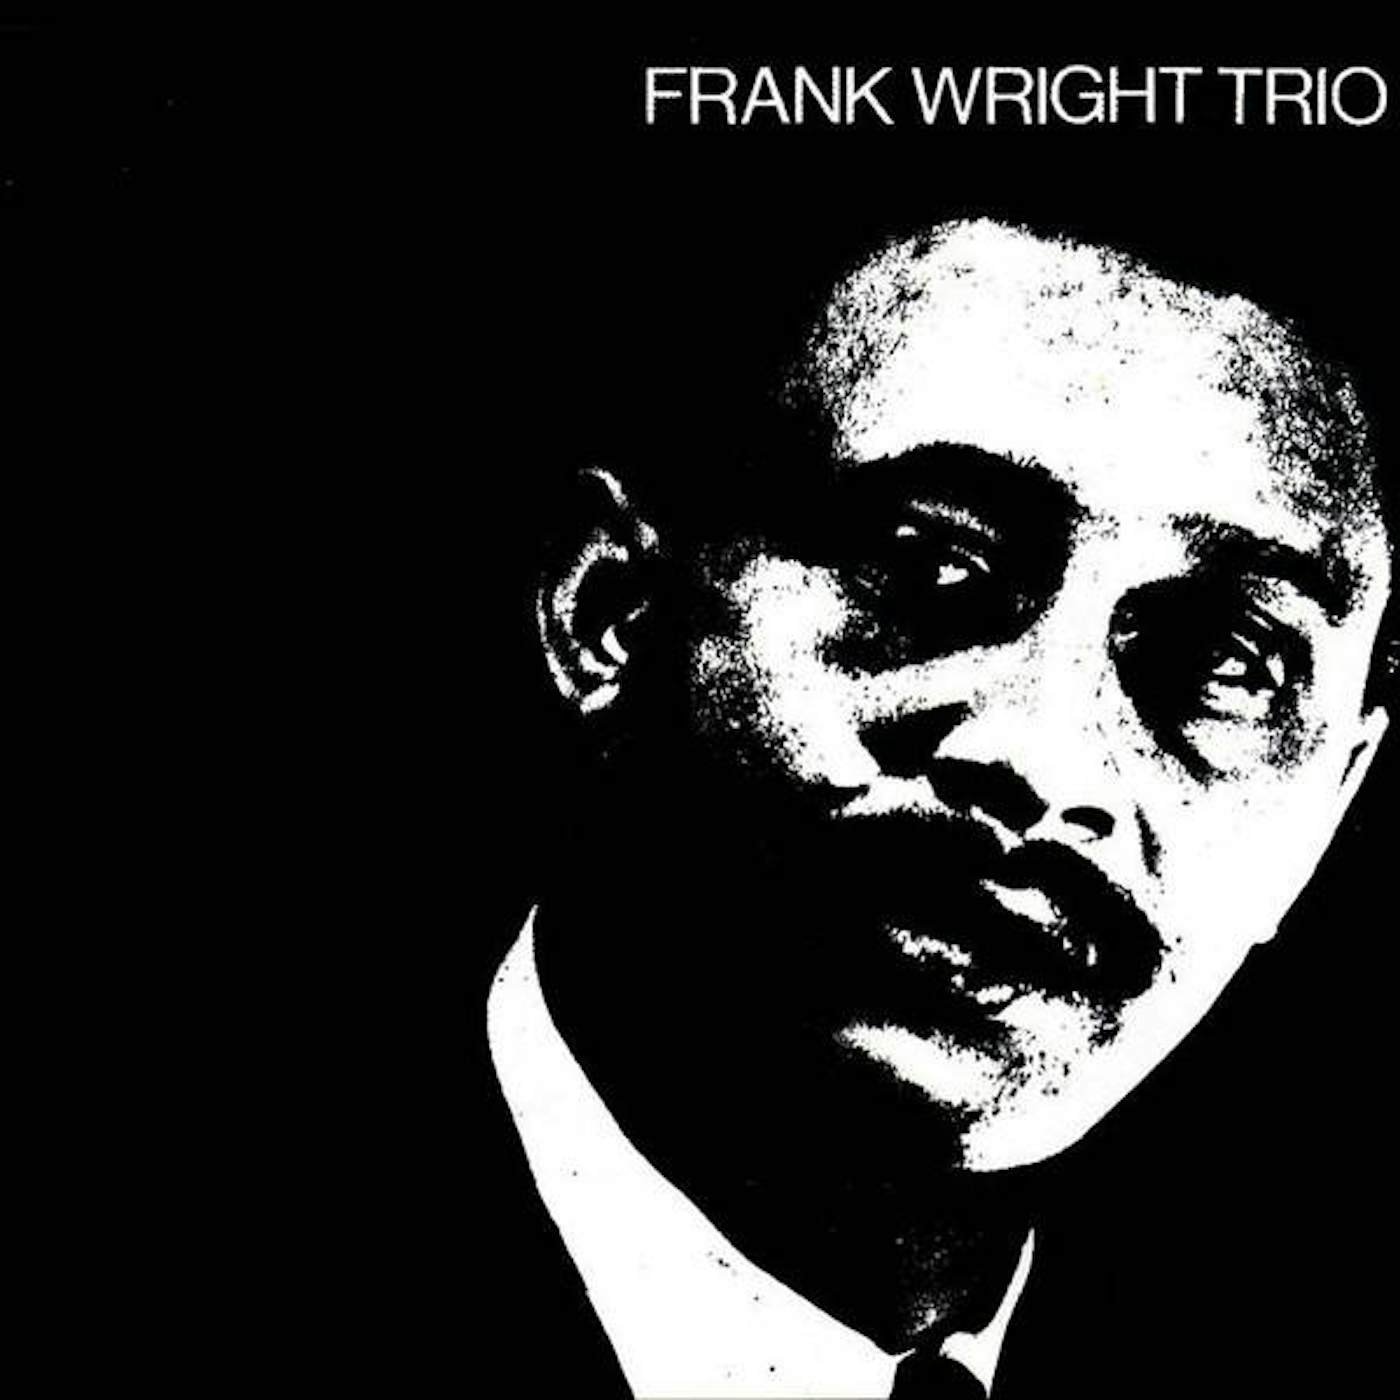 Frank Wright Trio Vinyl Record